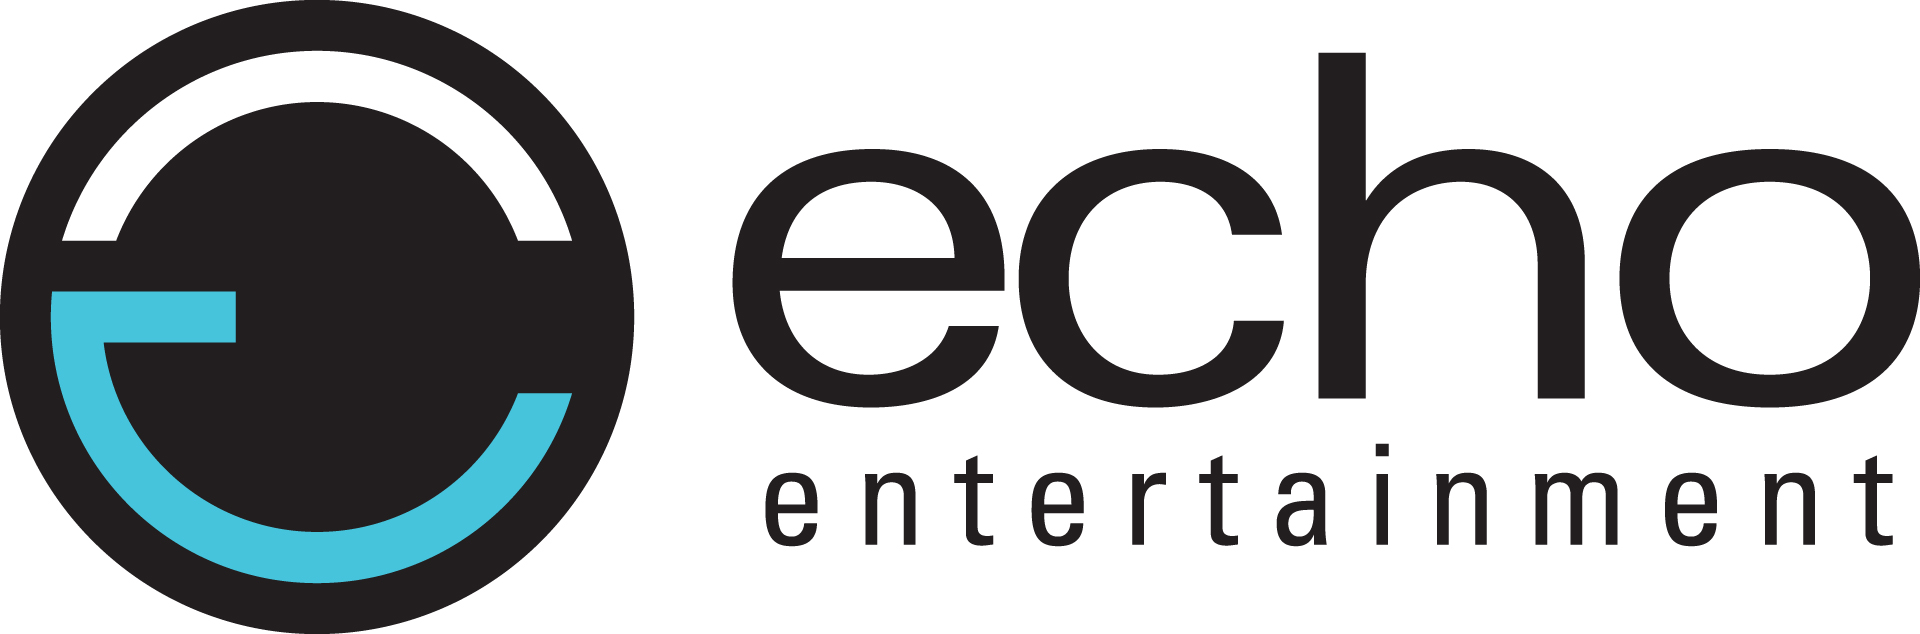 echo_logo_black_Logo.jpg